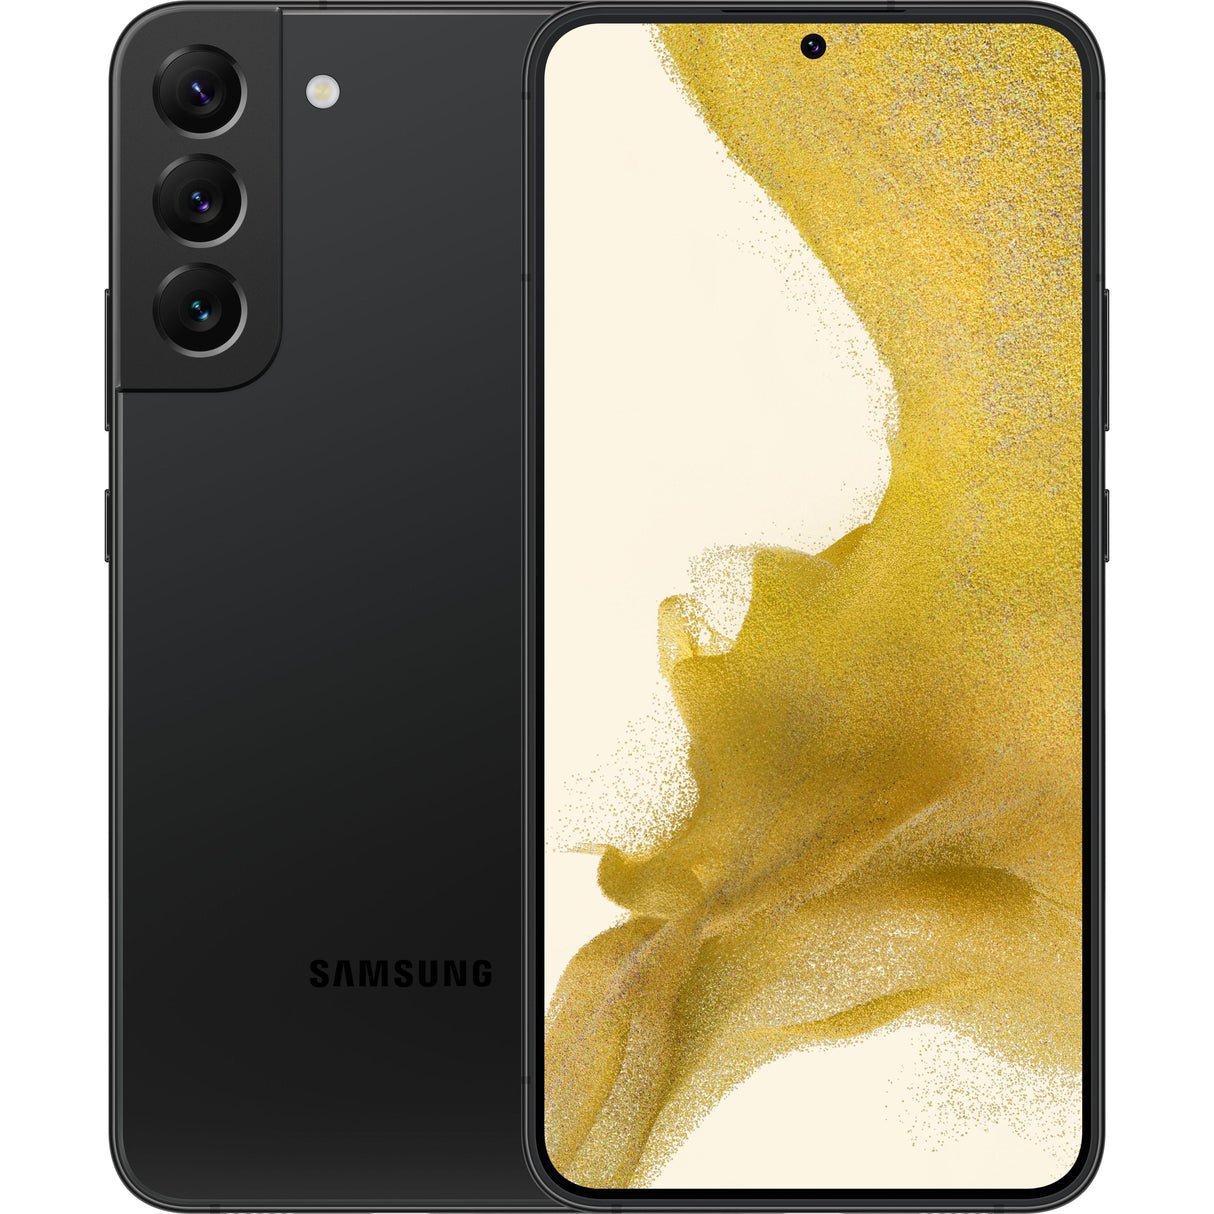 Samsung Galaxy S22 - 128GB - Phantom Black - US Cellular